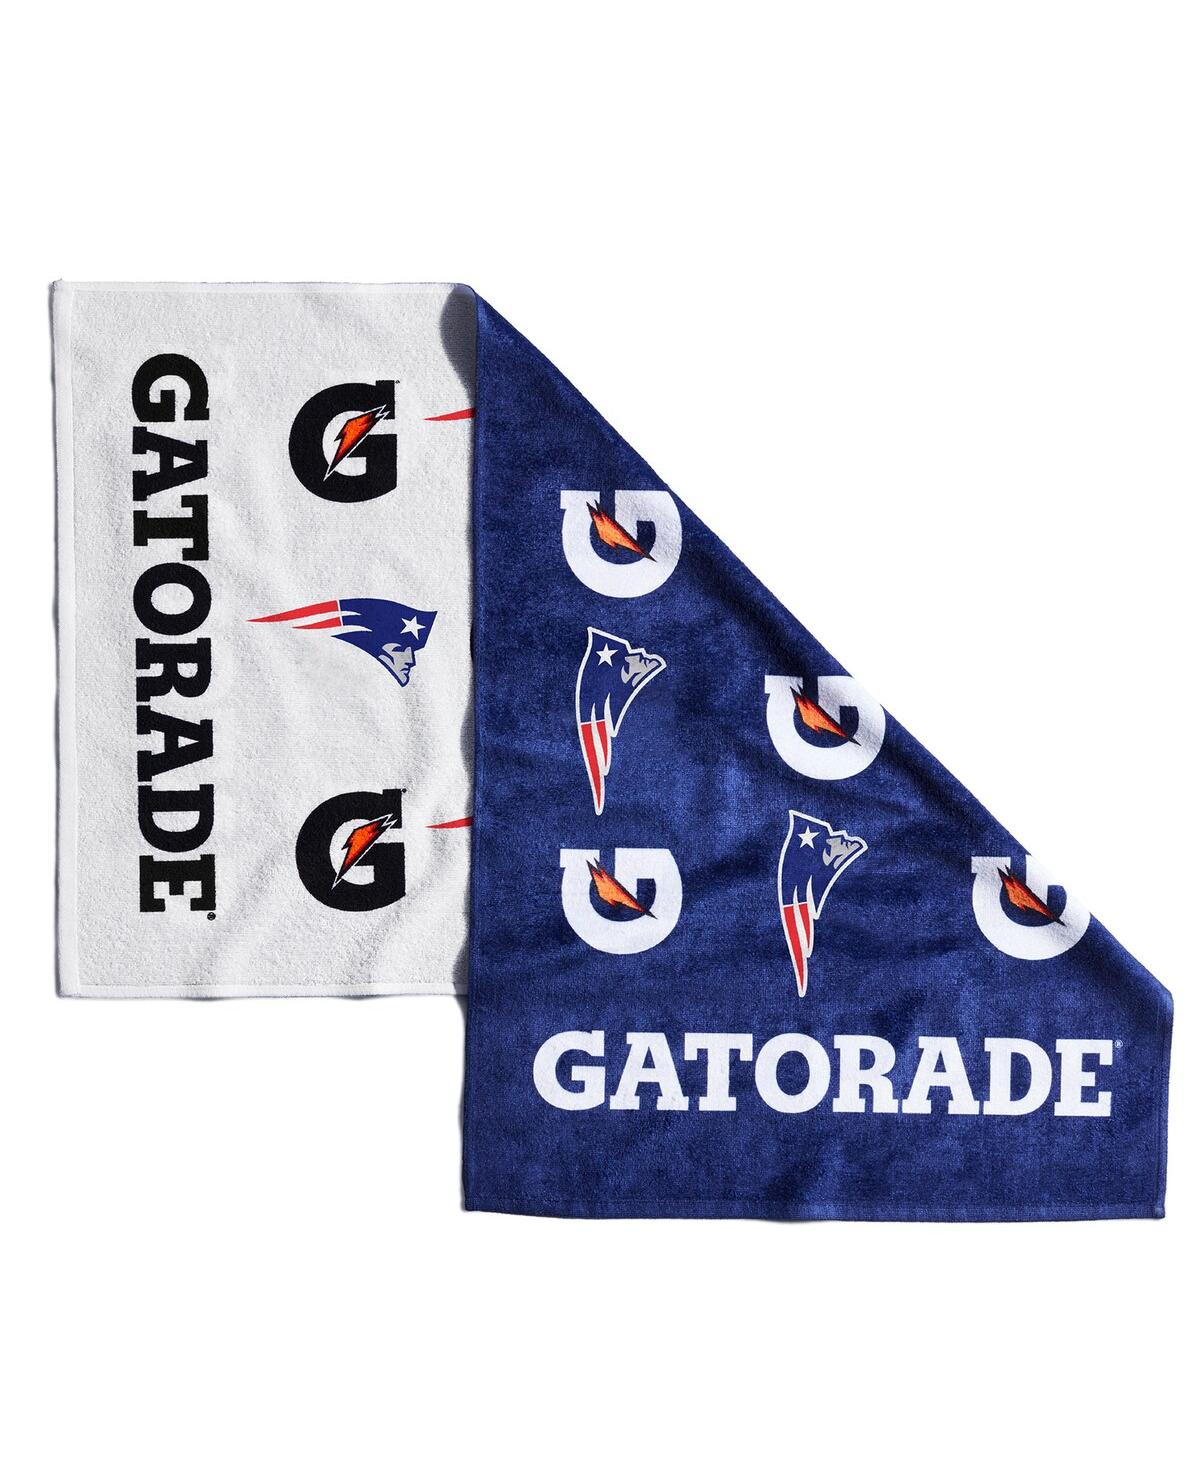 Wincraft New England Patriots On-field Gatorade Towel In Blue,white